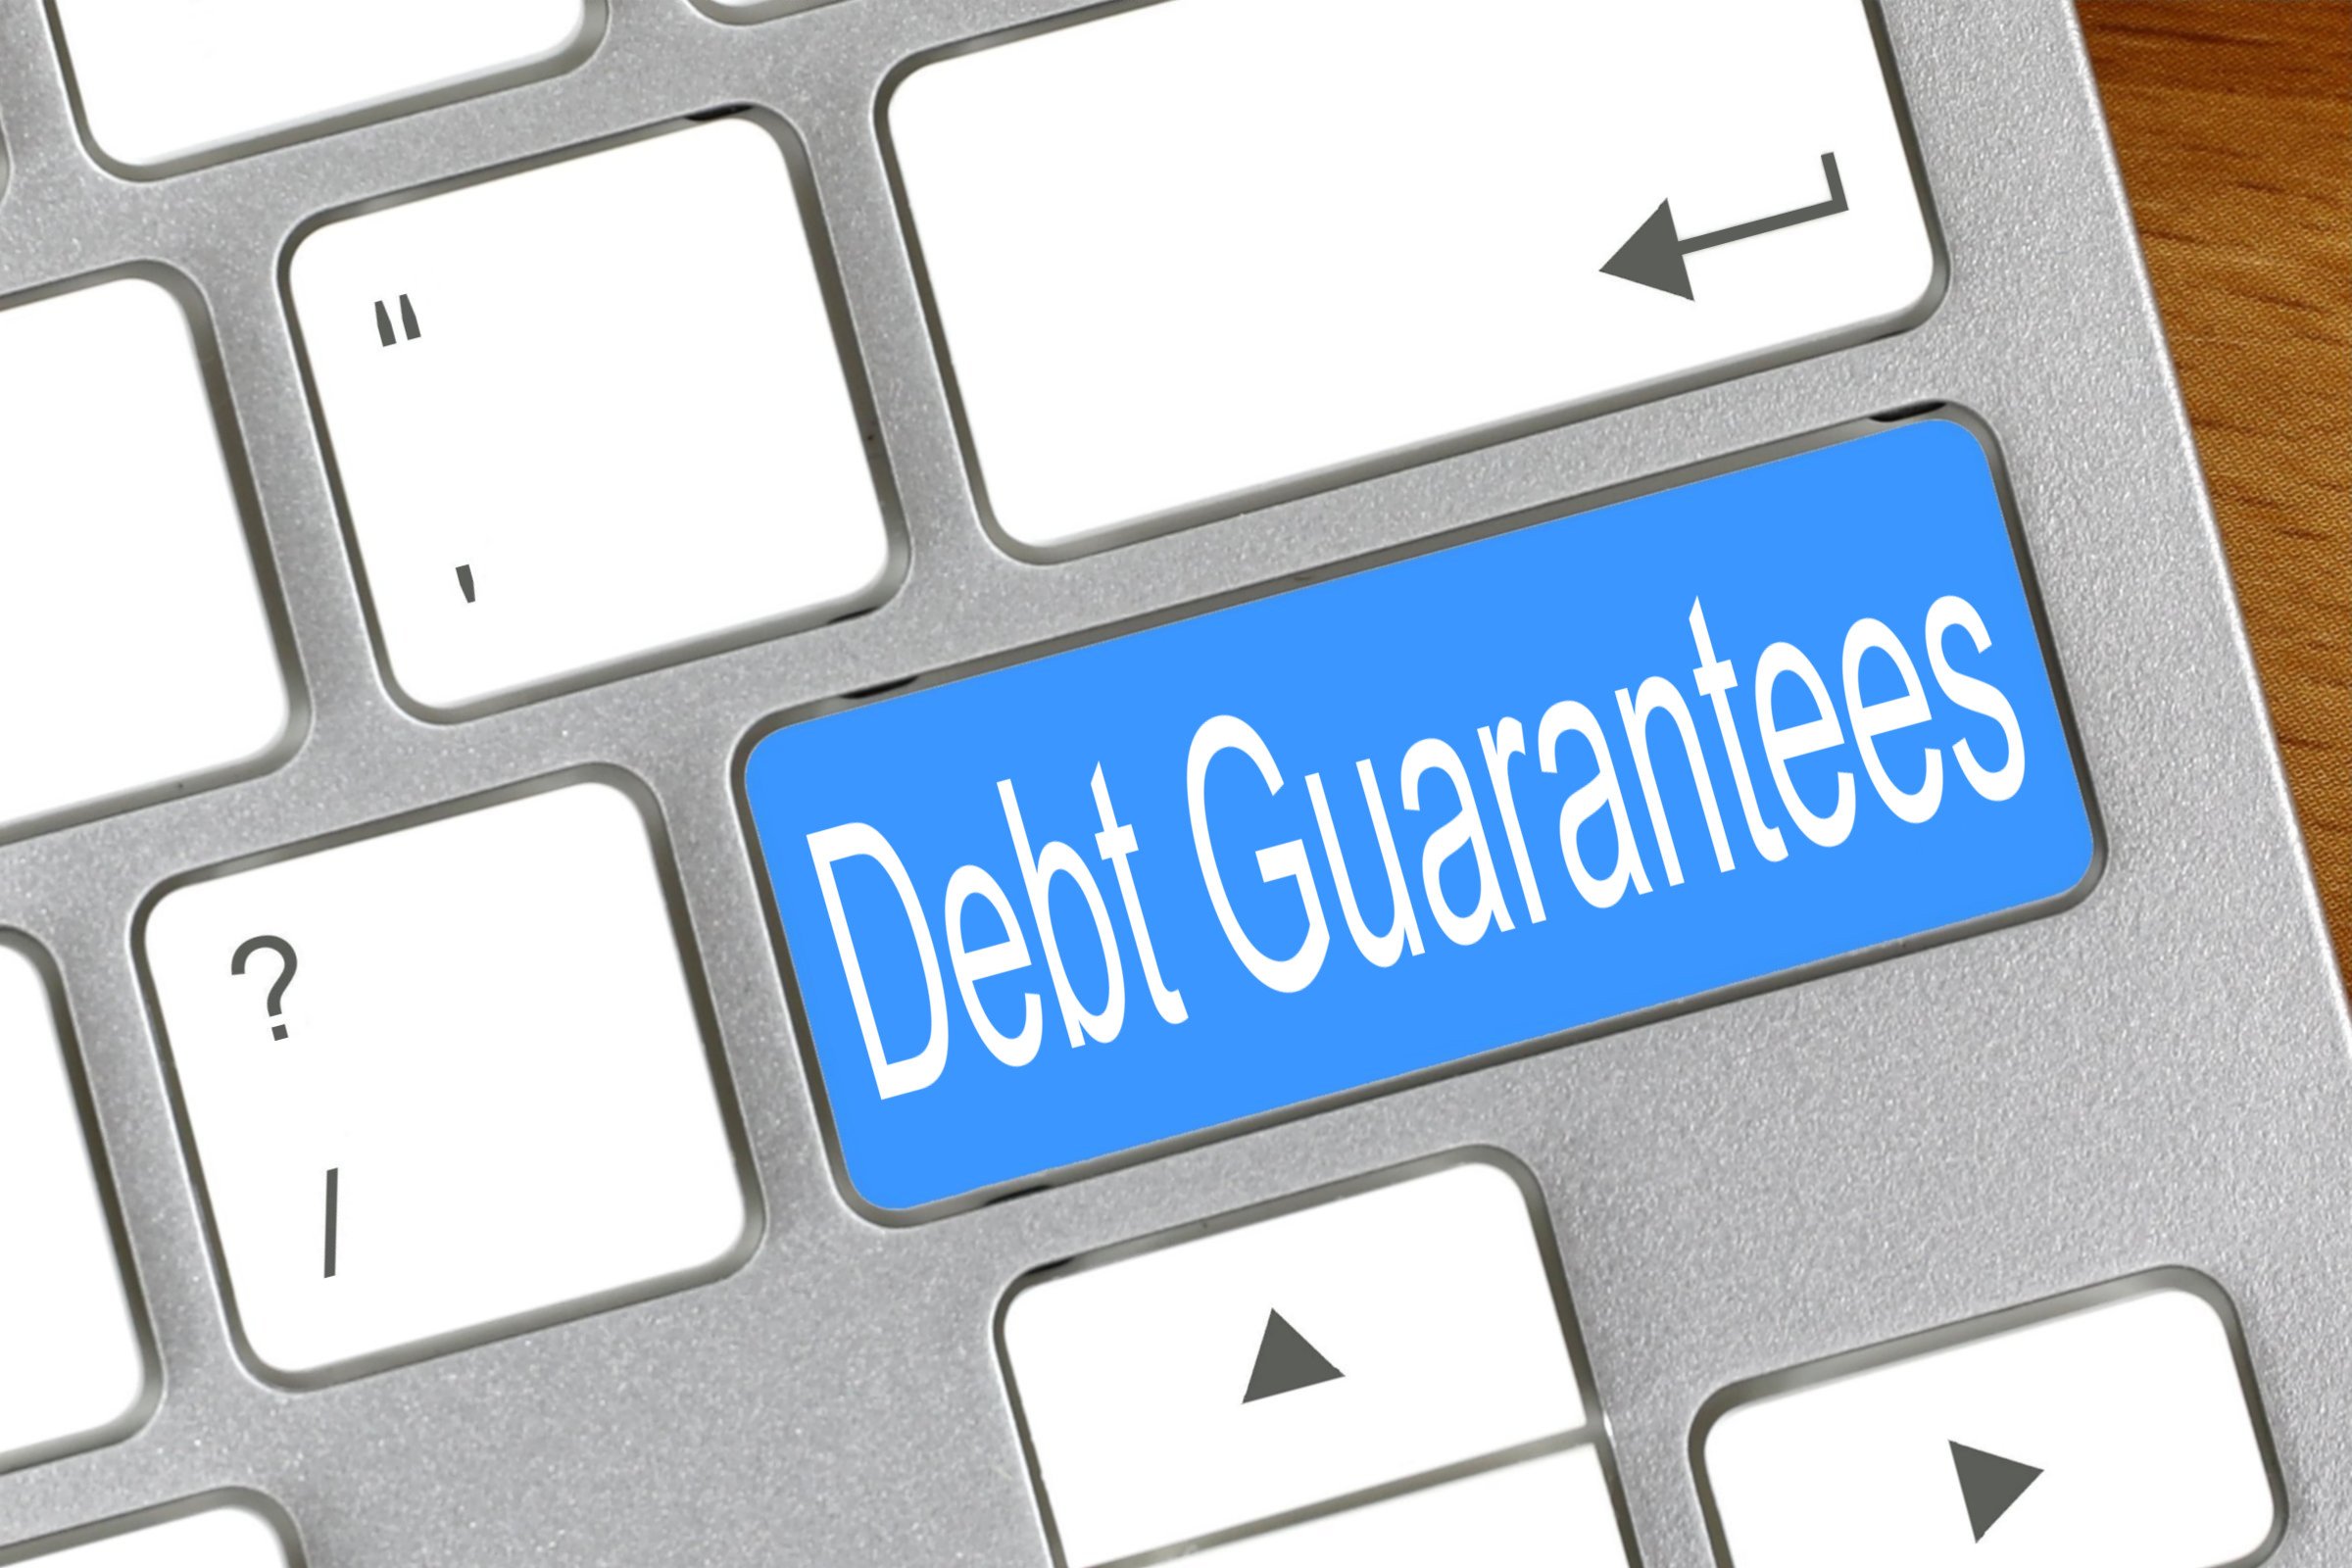 debt guarantees